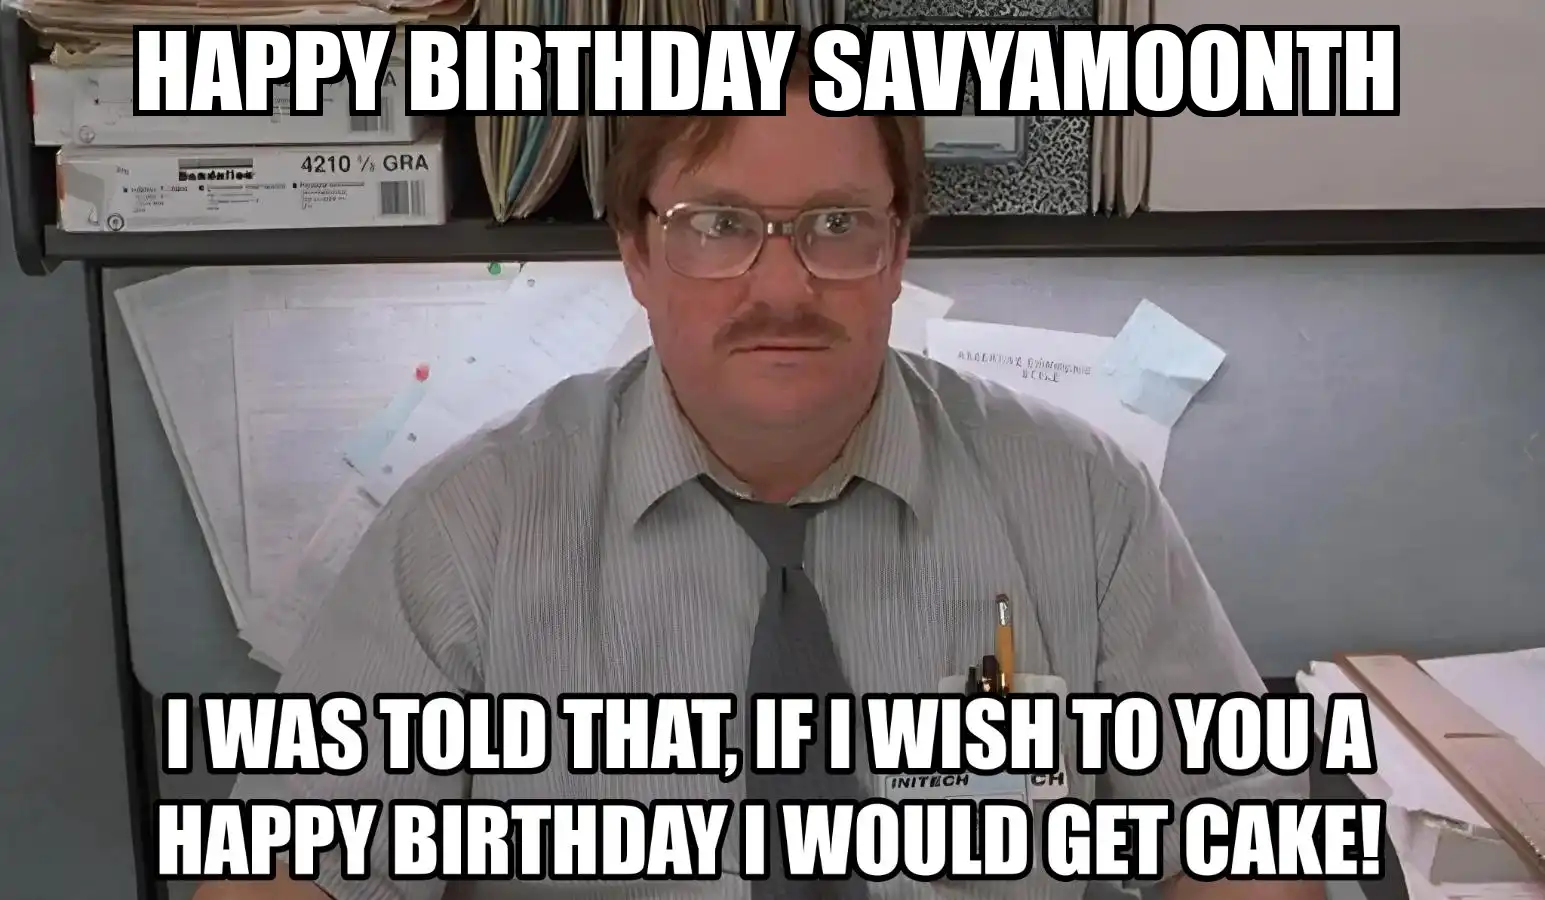 Happy Birthday Savyamoonth I Would Get A Cake Meme